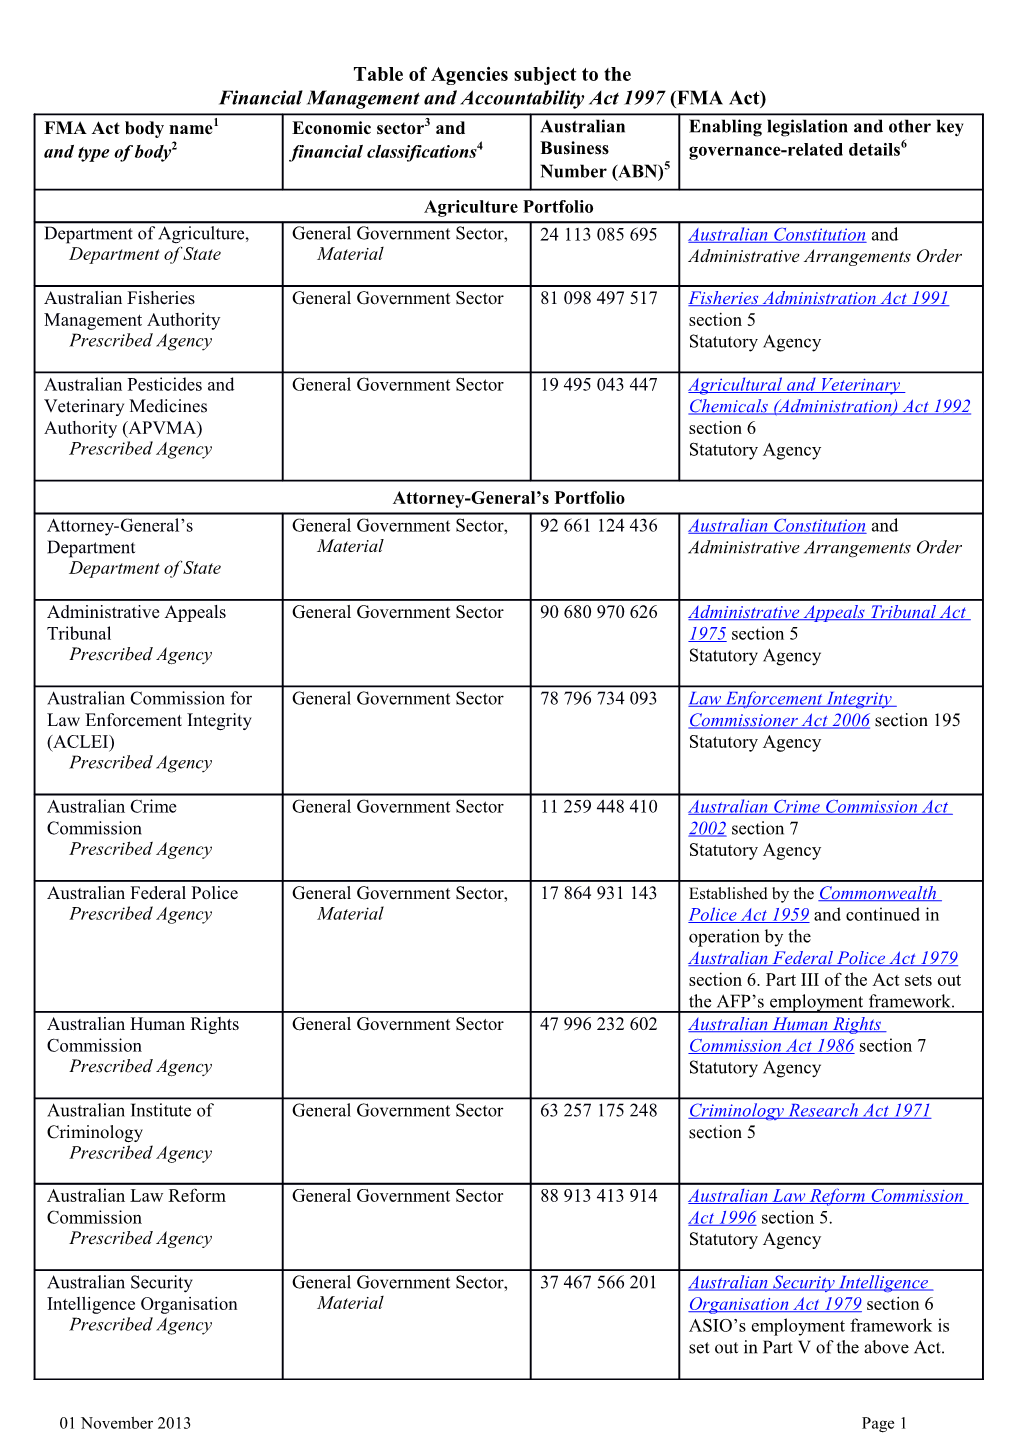 Table of FMA Agencies